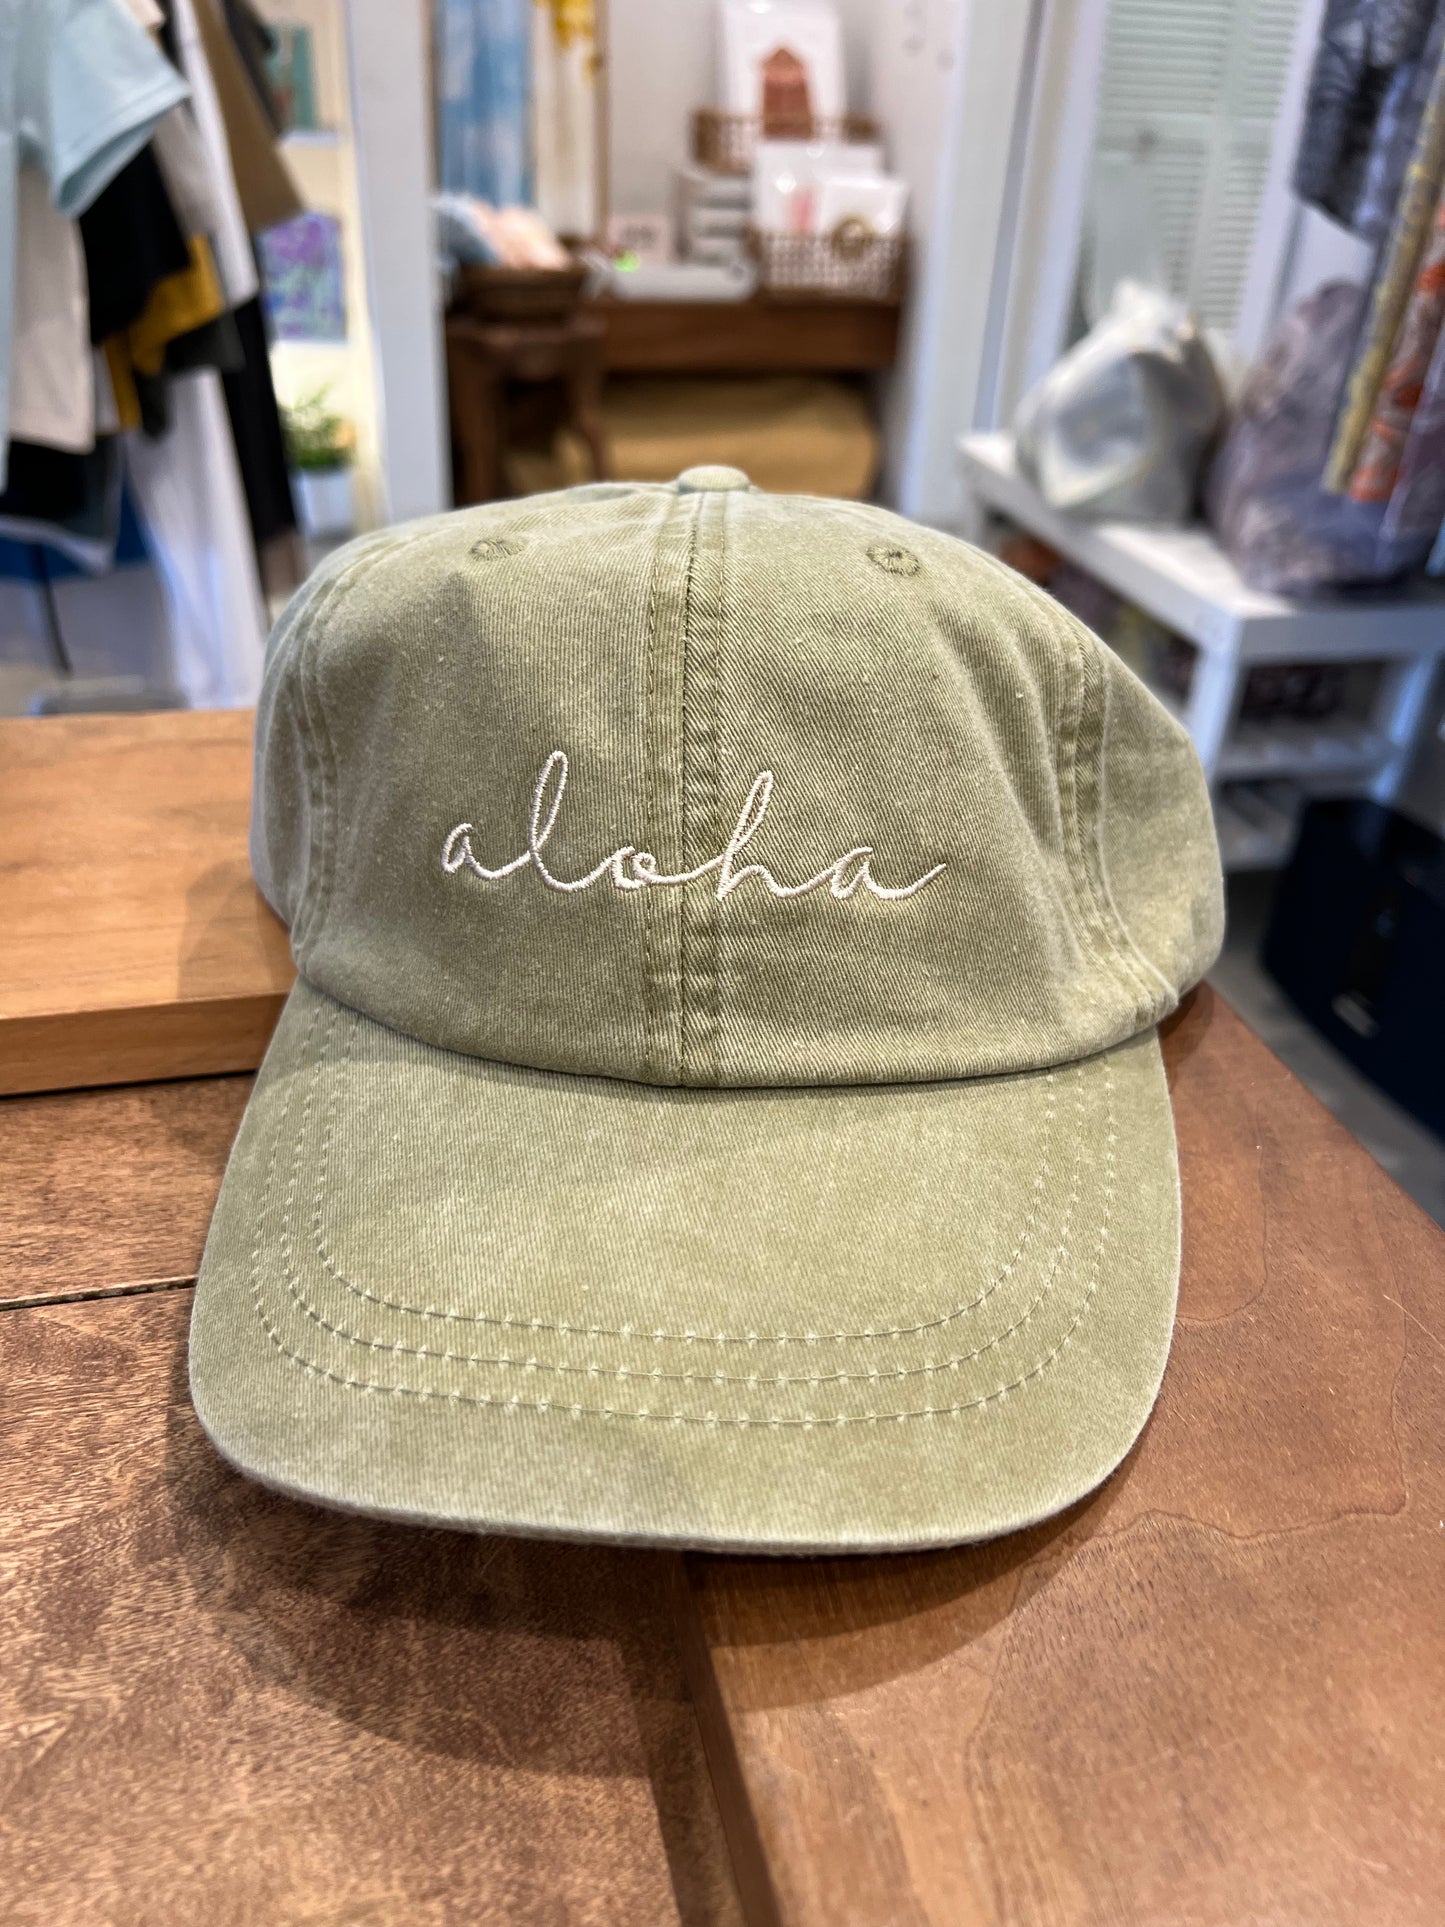 aloha leather strap cap